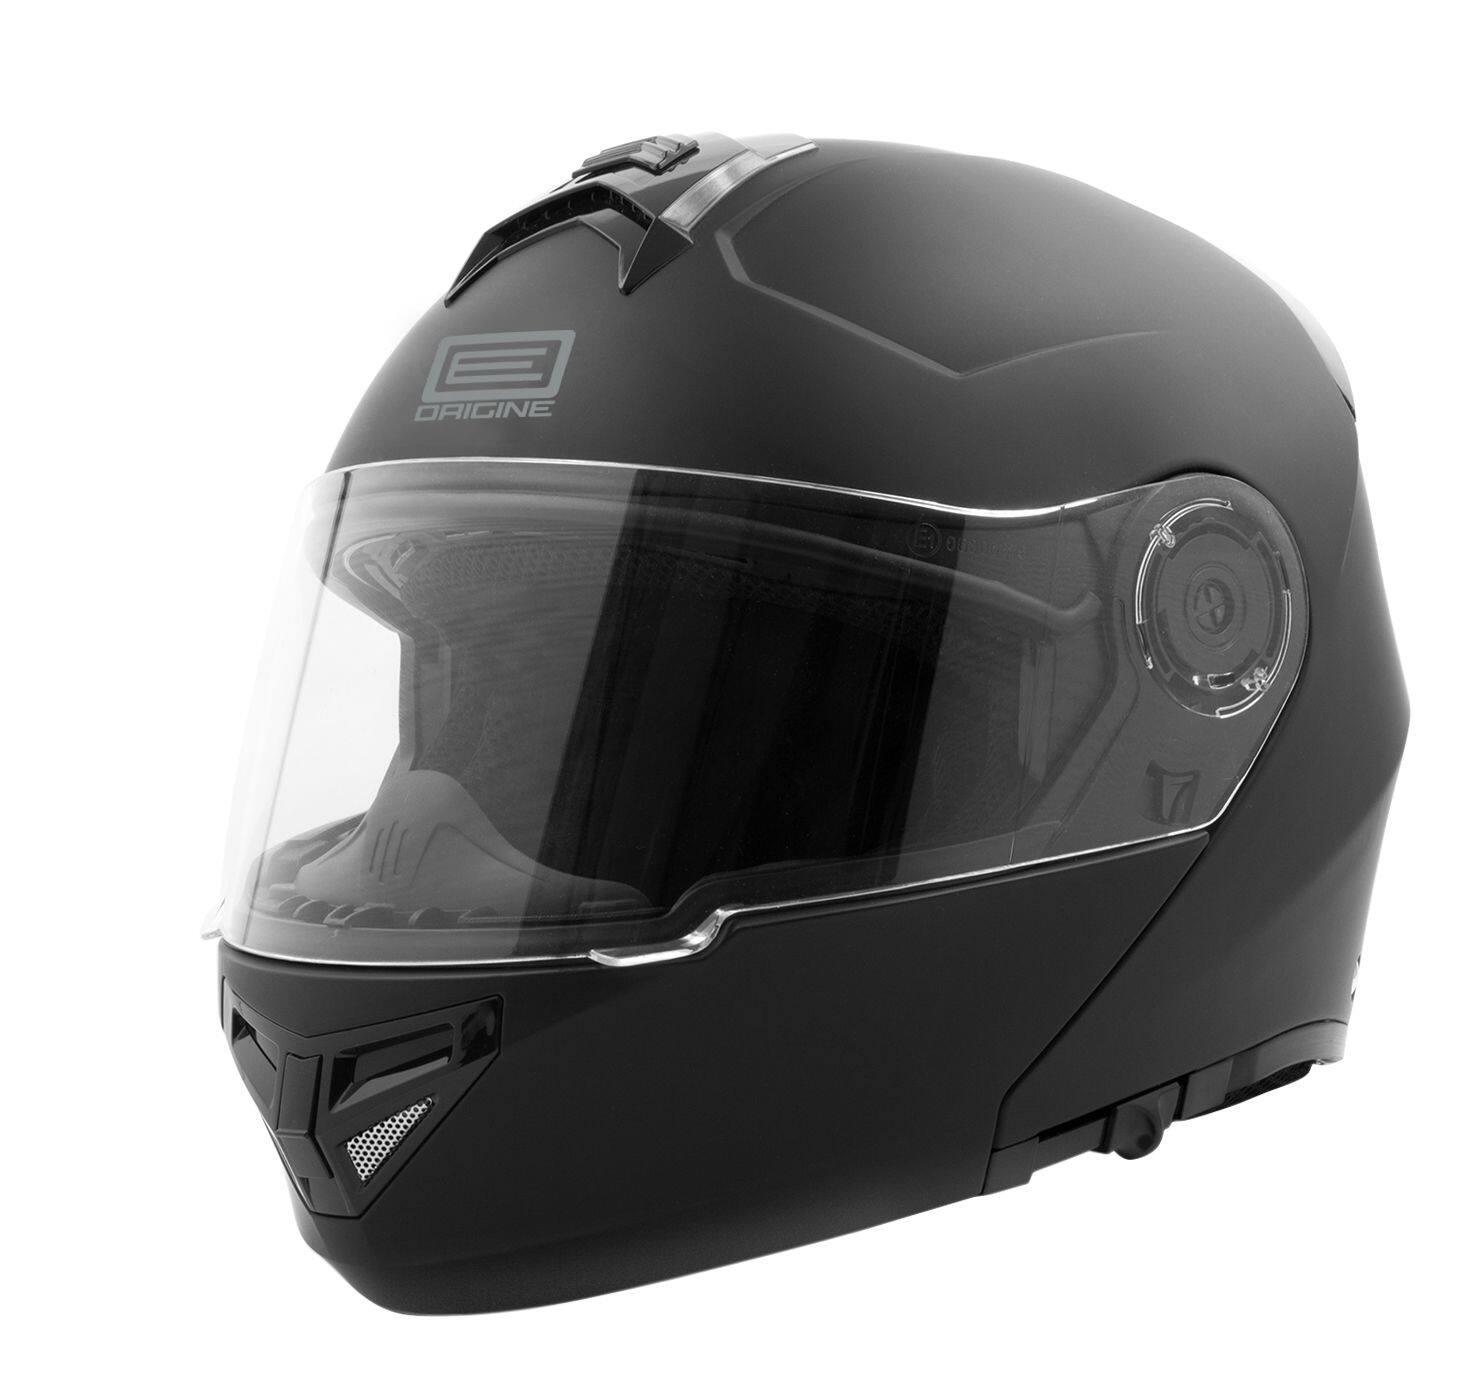 Origine Forma Street Full Face Motorcycle Modular Helmet, Adult